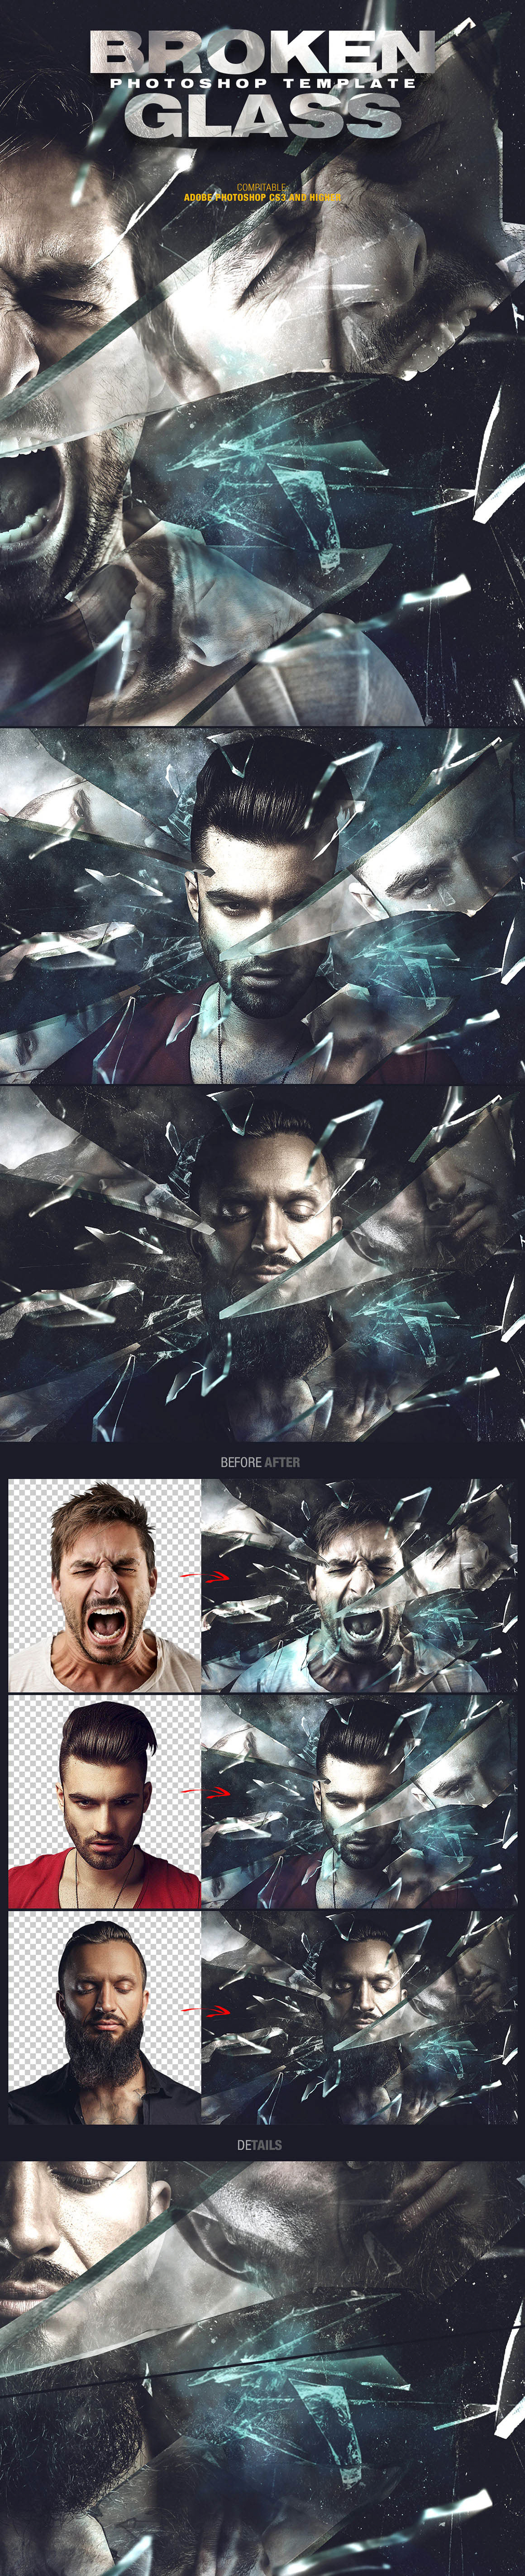 amorjesu photoshop tutorial manipulation retouching  graphic design Mockup digital artistic